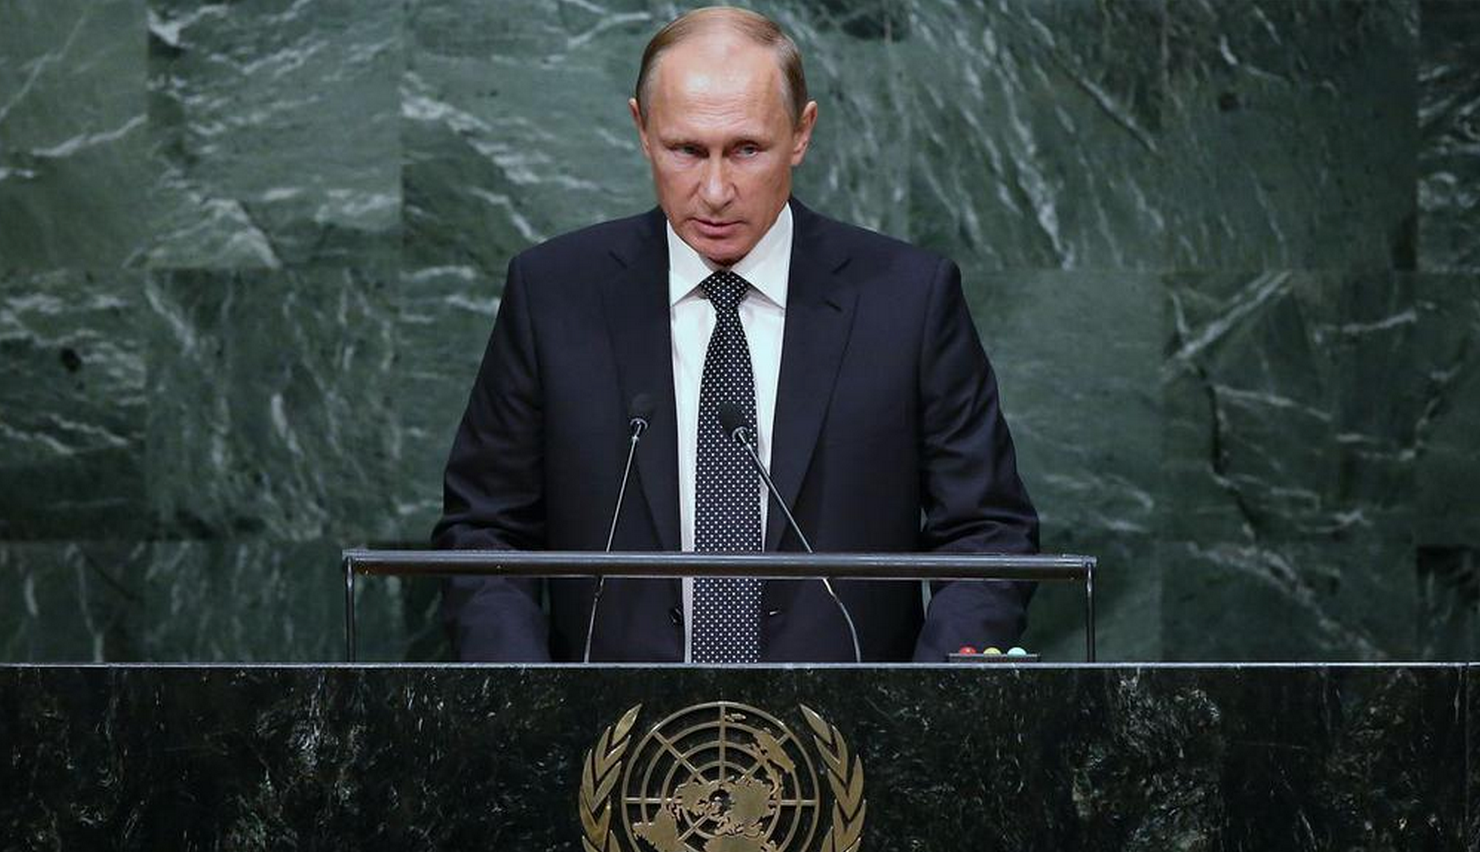 Vladimir Putin Uses Un General Assembly Speech To Praise Darren Clarke